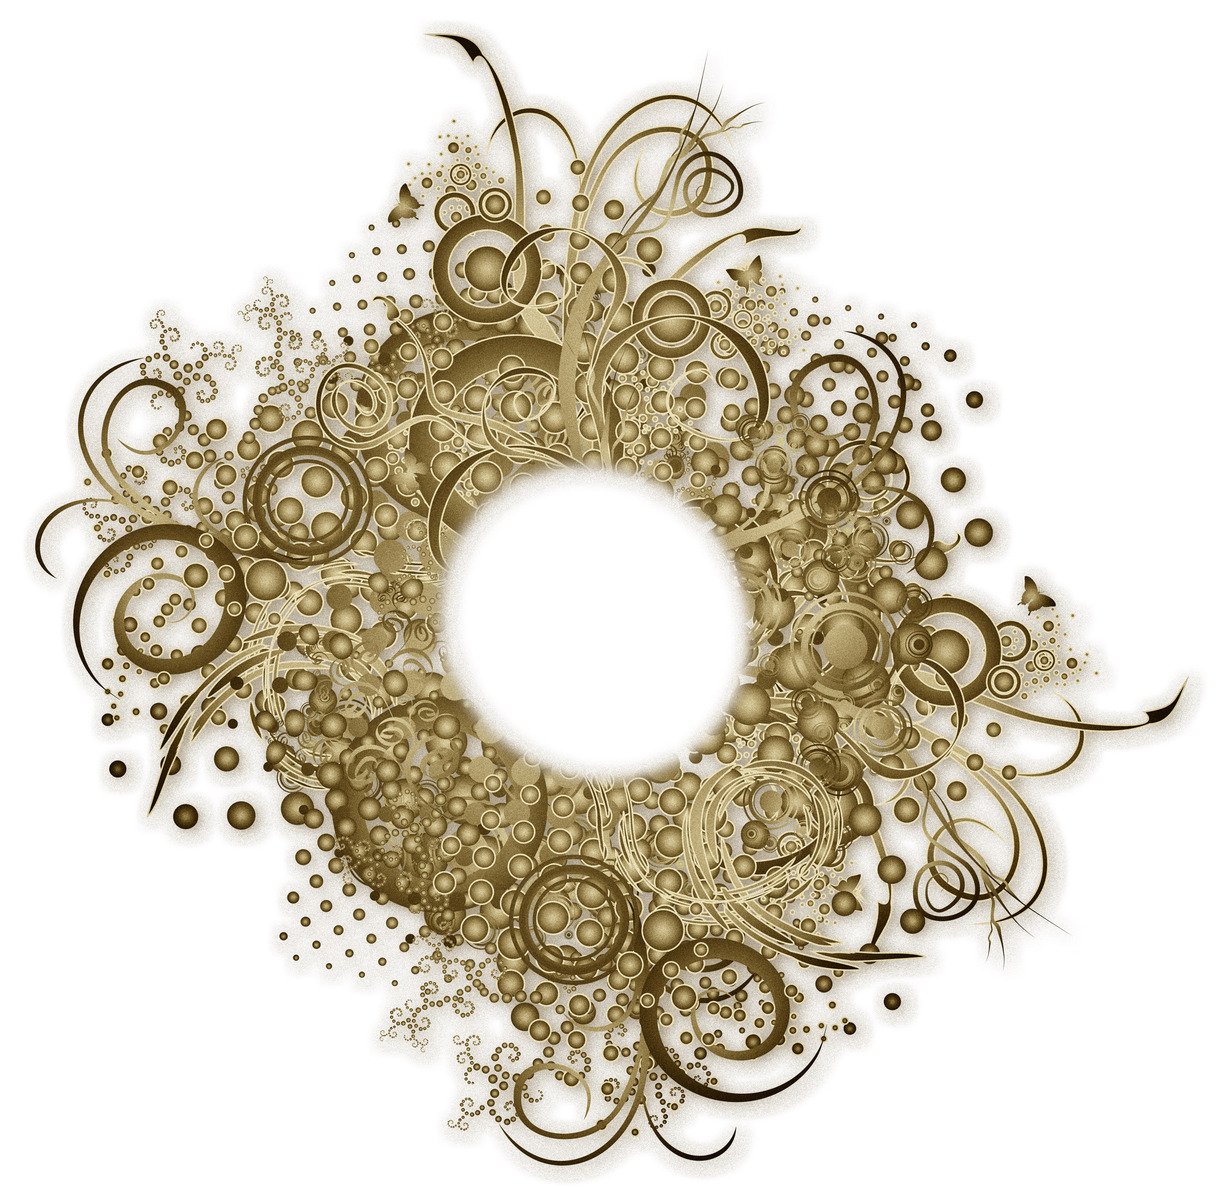 a circular design on a white background